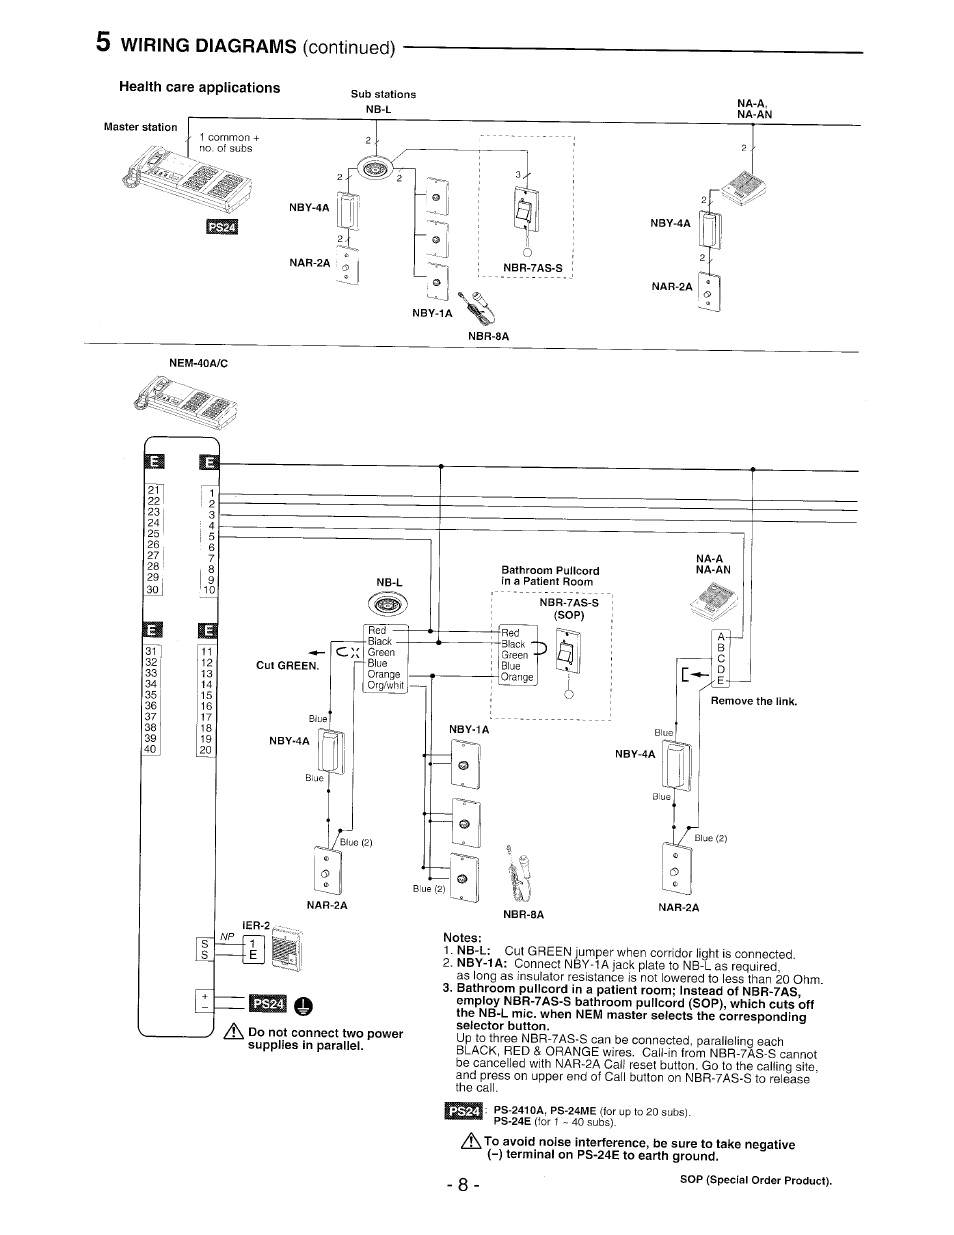 aiphone intercom wiring diagram aiphone jk wiring diagram aiphone jk wiring diagram of aiphone intercom wiring diagram jpg